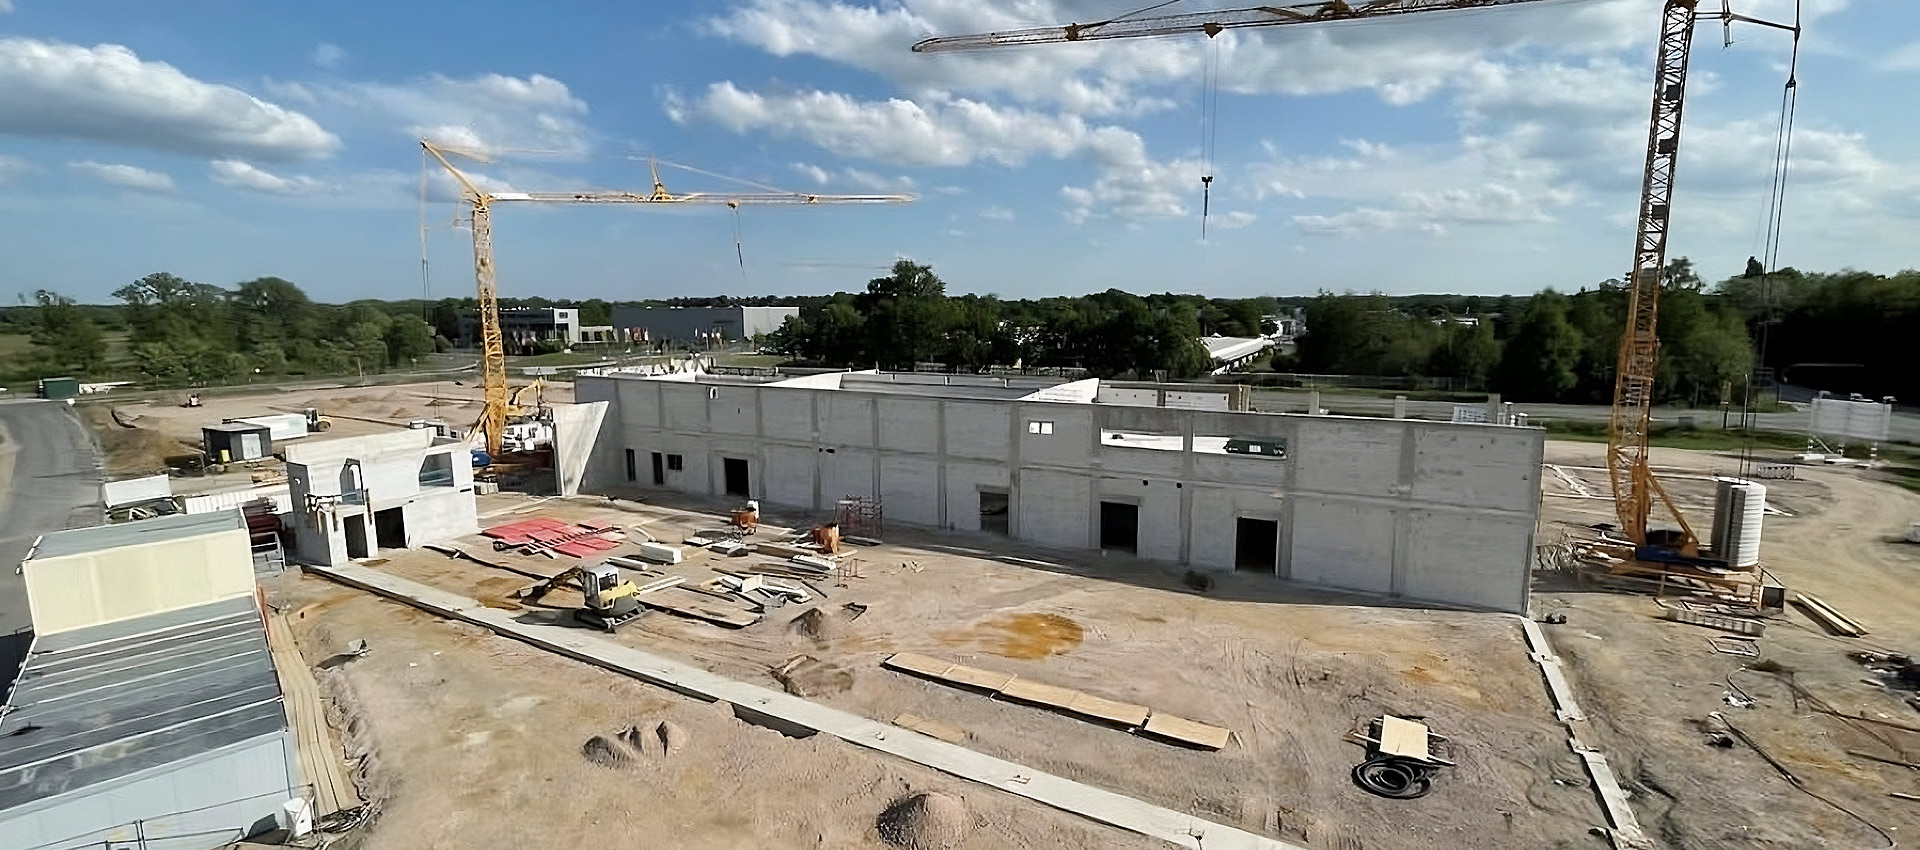 KP Bau - Bauunternehmen | Rohbau | Hochbau - Duisburg - Slide 4